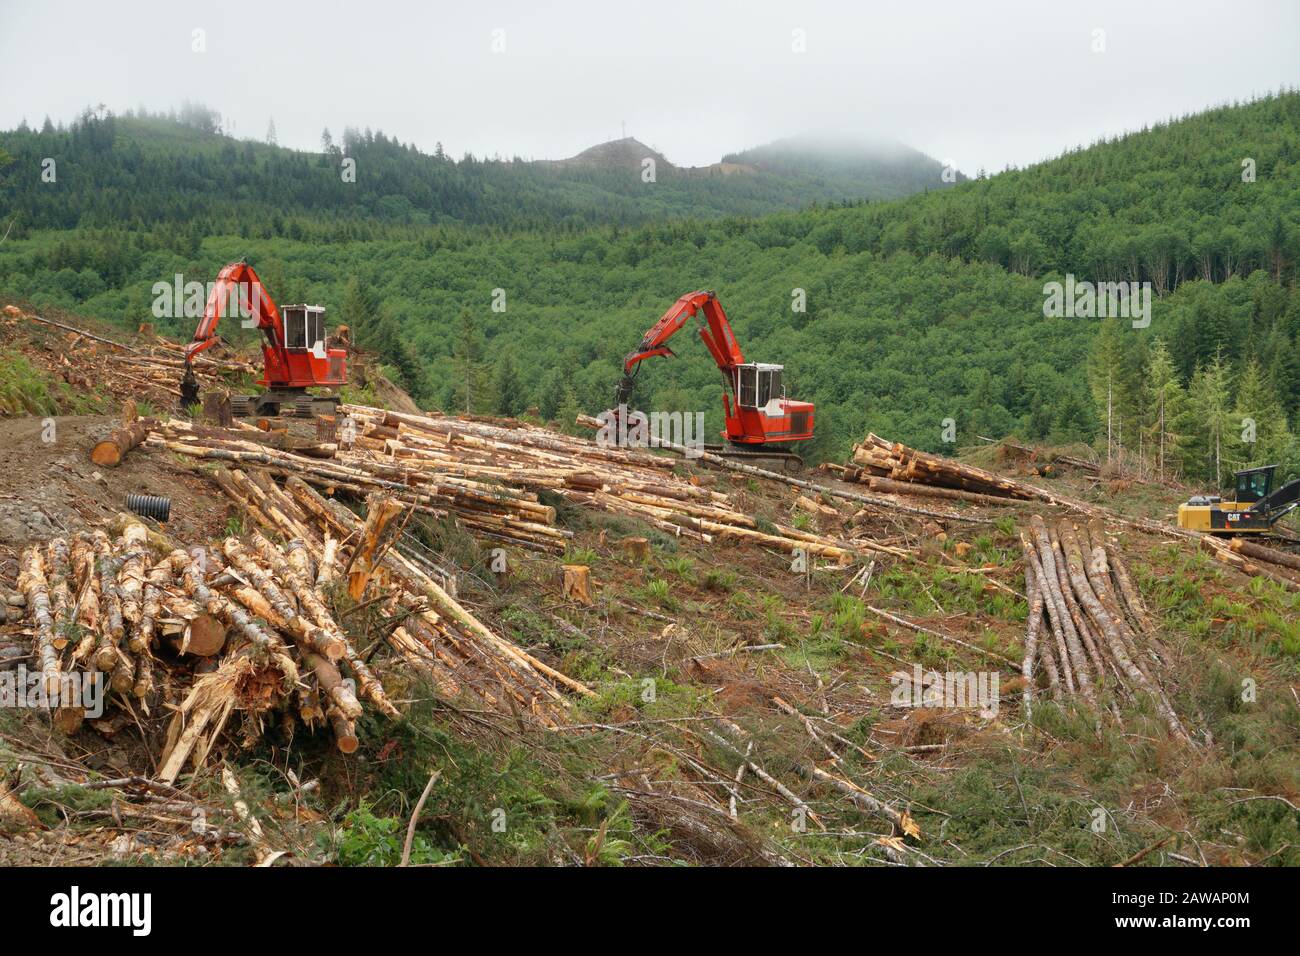 Timber harvesting in the Olympic Peninsula of Washington State, USA. Stock Photo